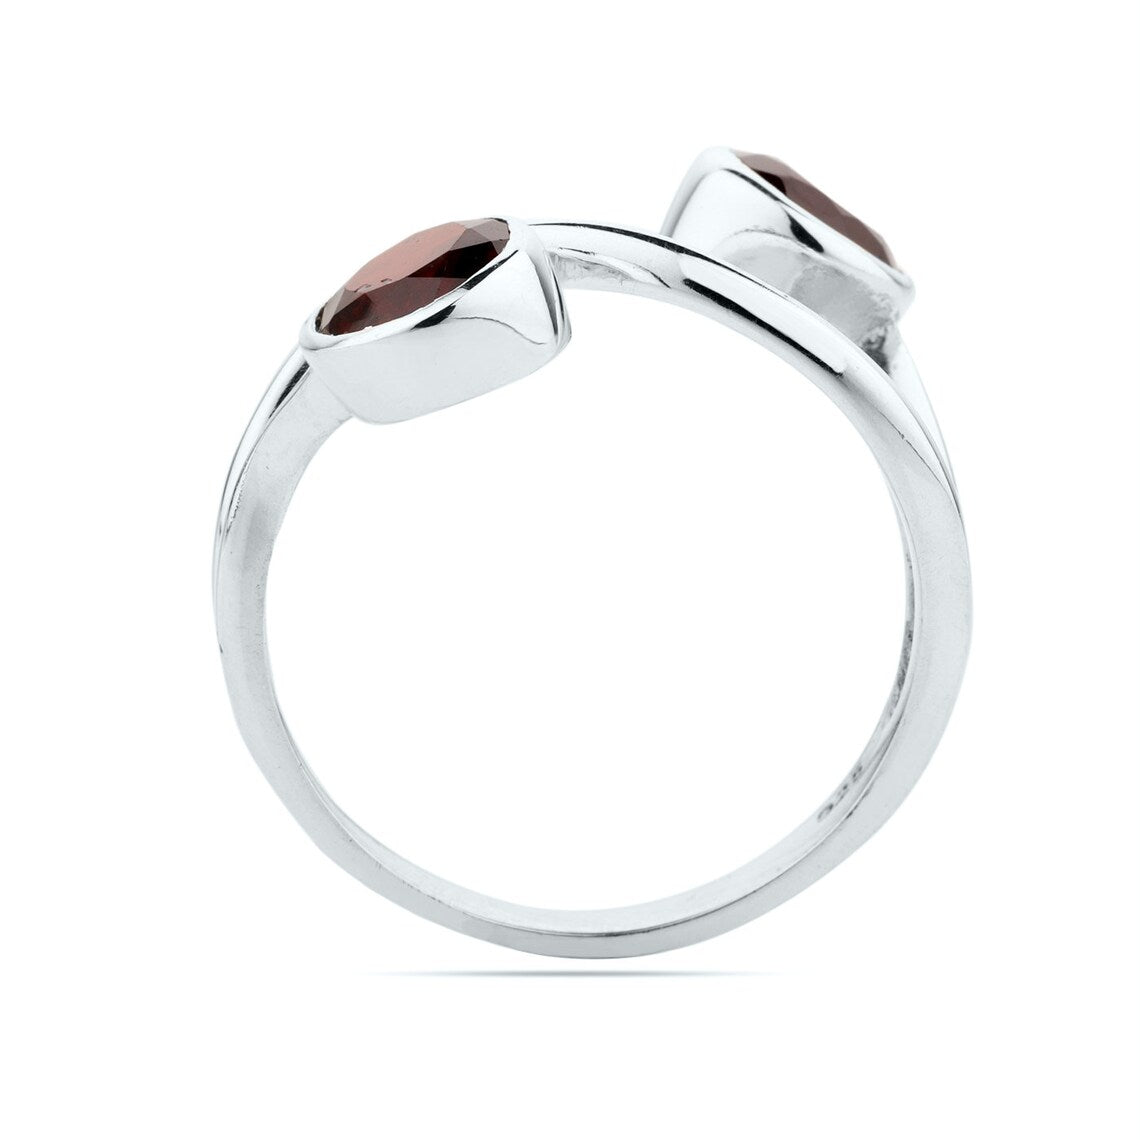 Natural Garnet Ring - Red Garnet Ring - Garnet Sterling Silver Ring - 2 Garnet Stones Ring - Round Garnet Ring